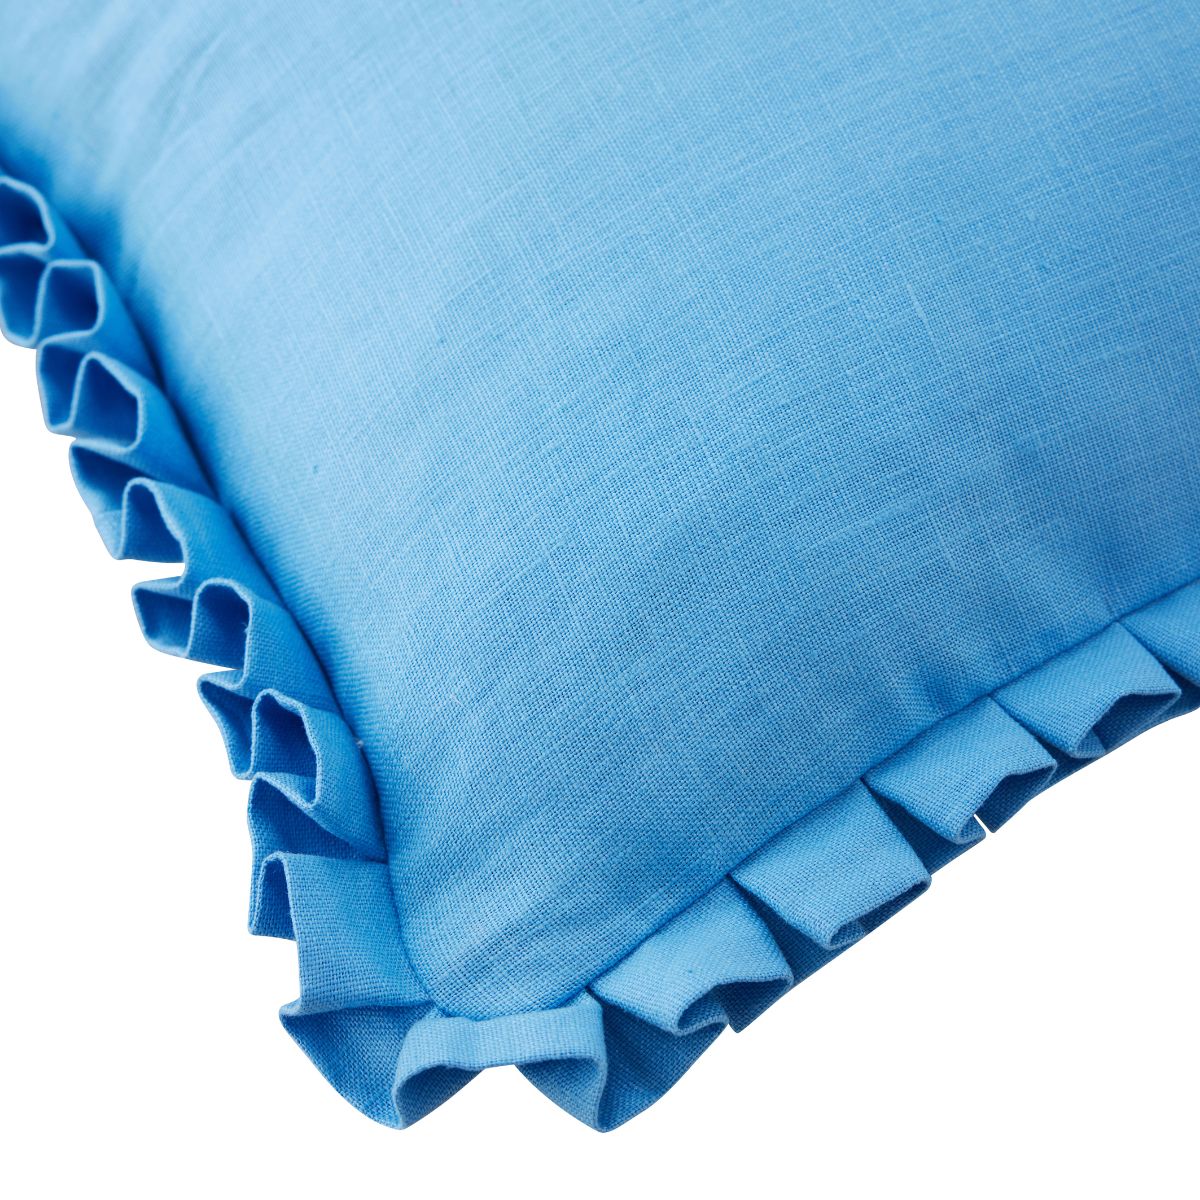 Beth Box Pleat Pillow in Cornflower - Caitlin Wilson Design